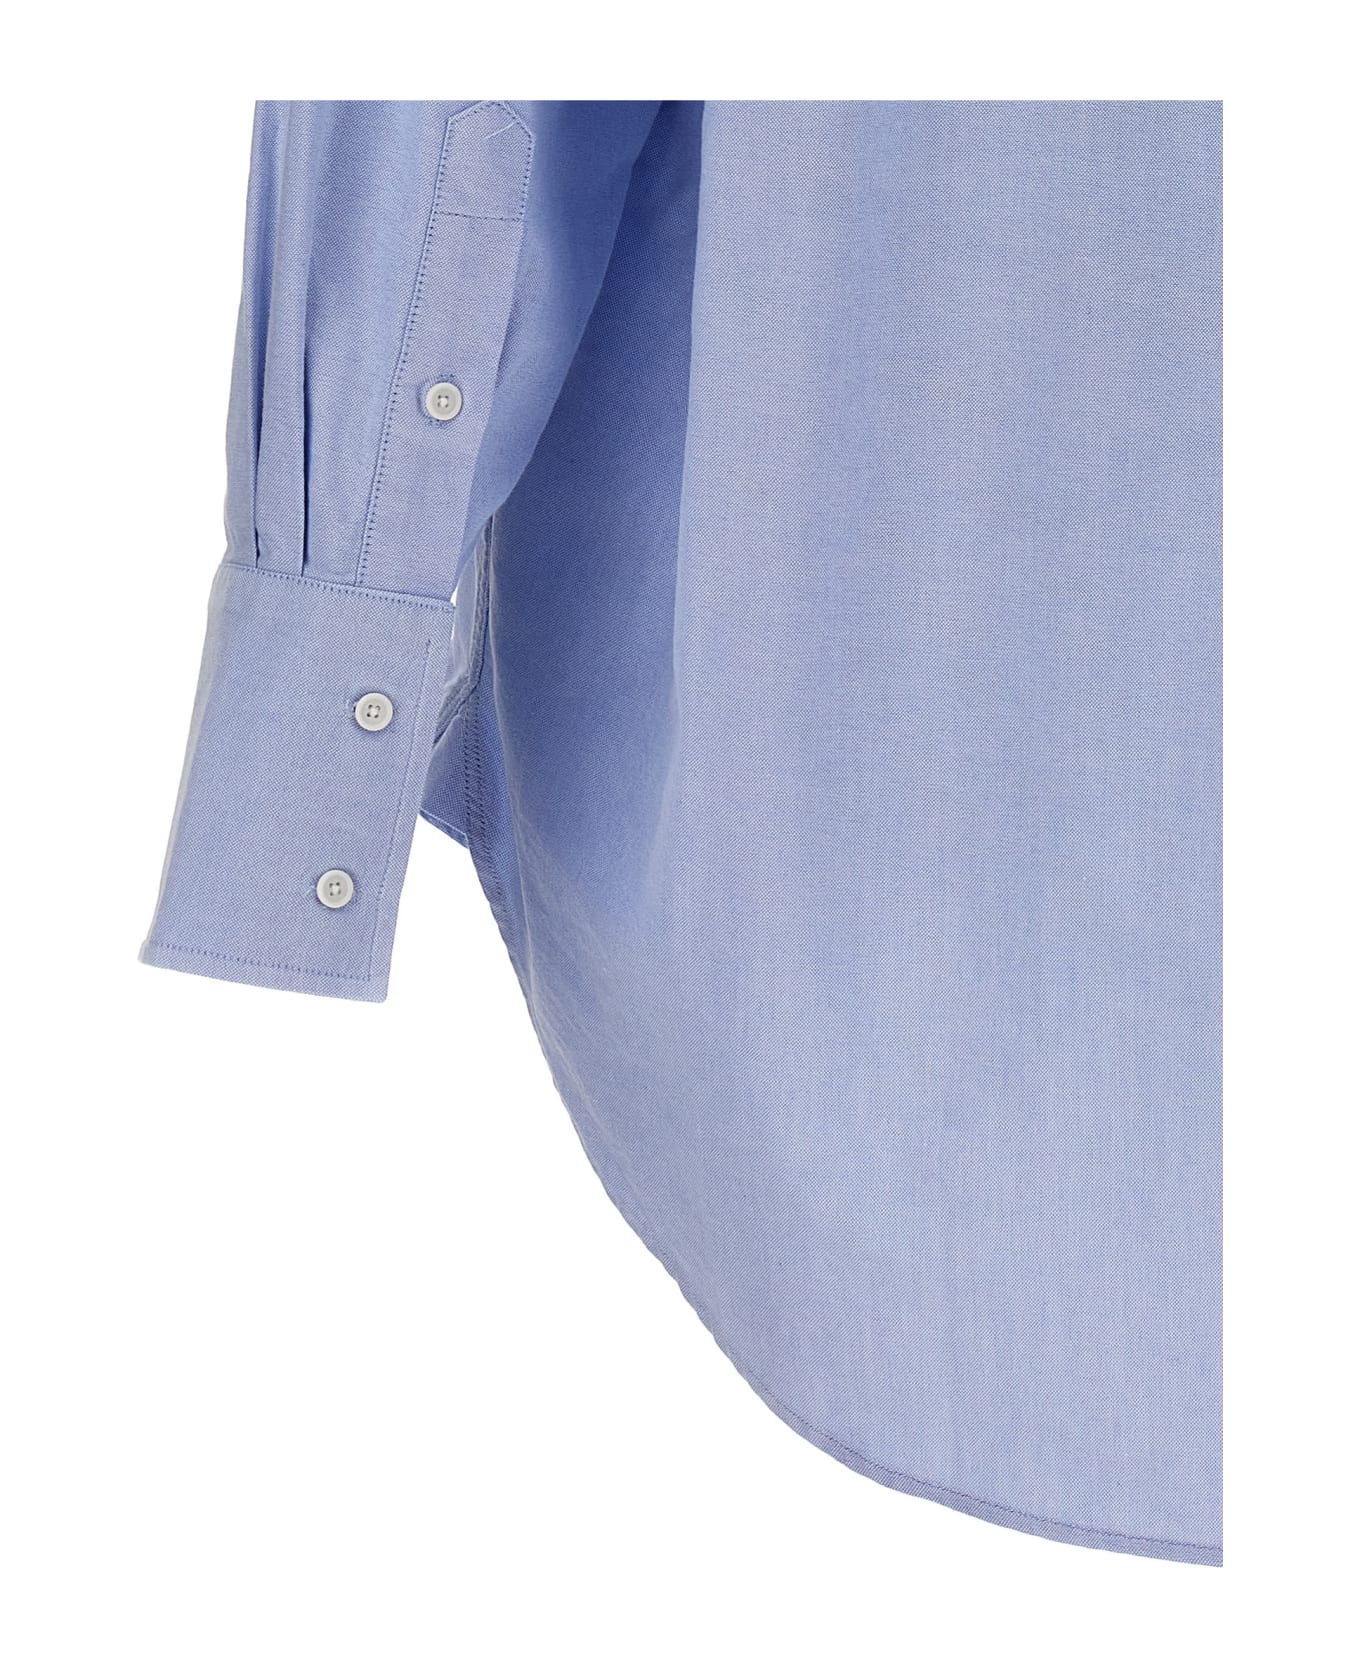 J.W. Anderson Oversized Shirt - Light Blue